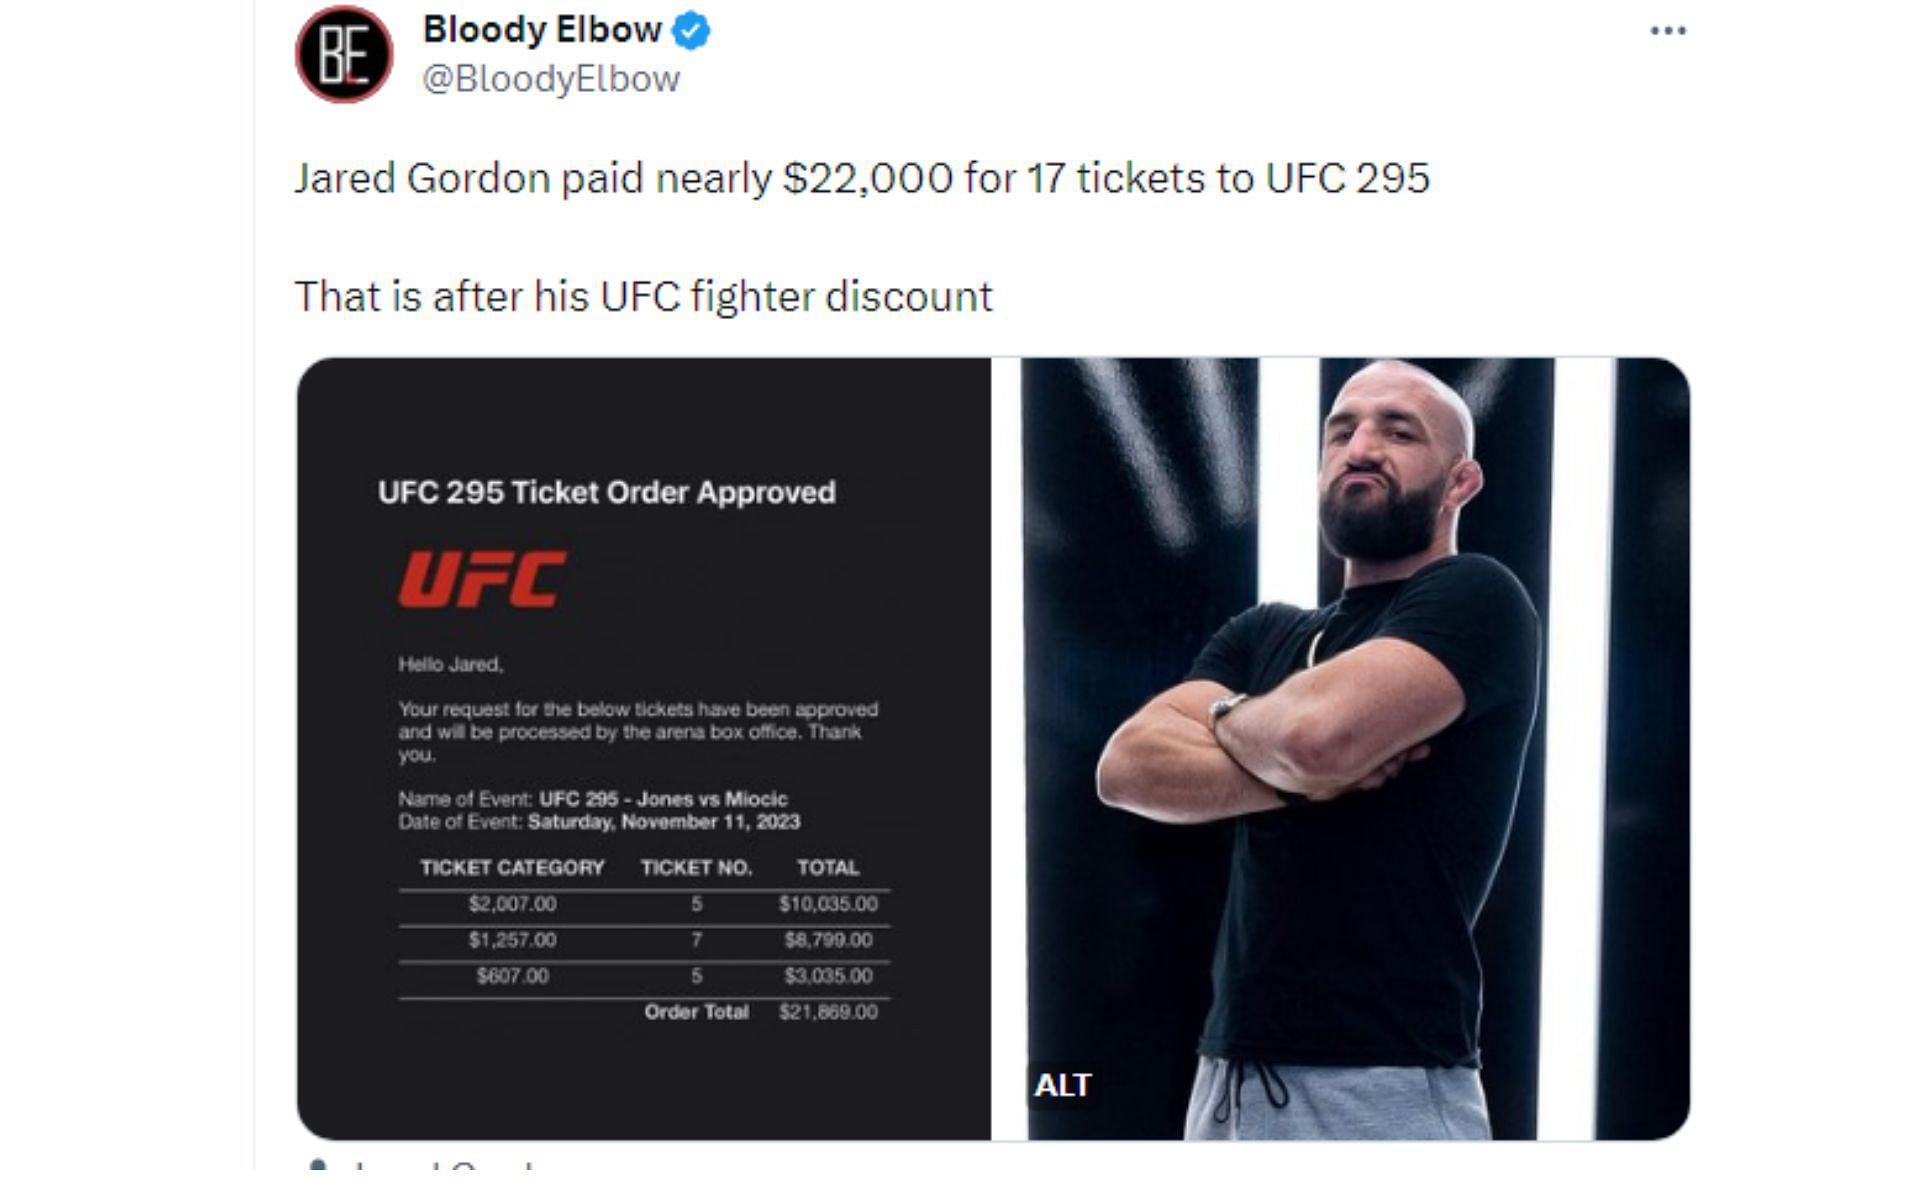 Bloody Elbow tweet regarding UFC 295 tickets